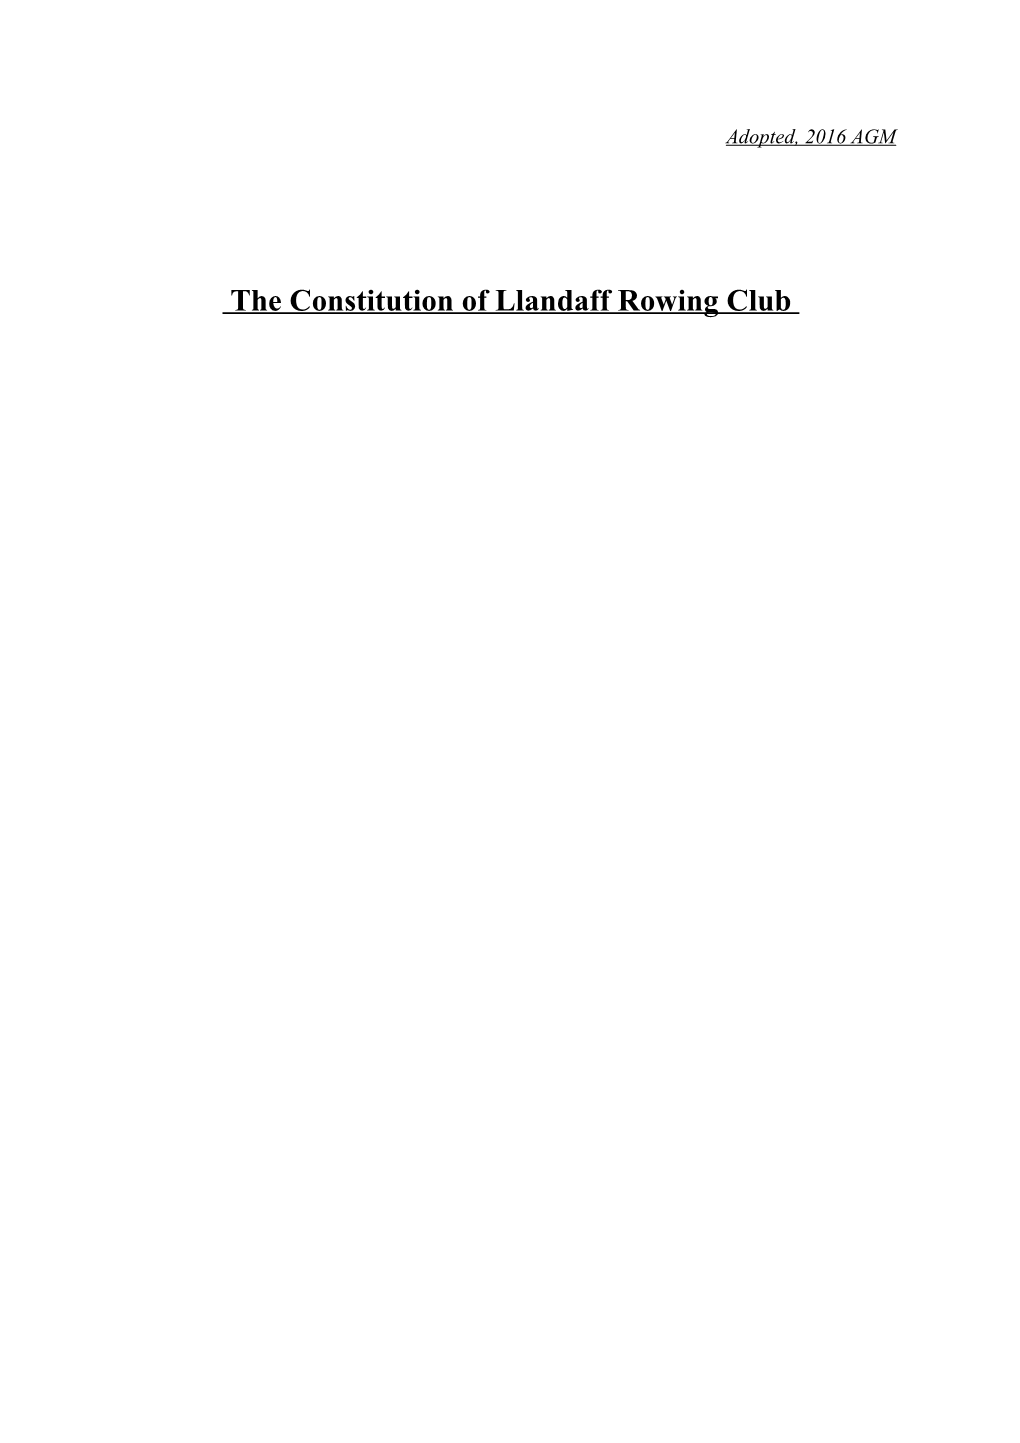 The Constitution of Llandaff Rowing Club